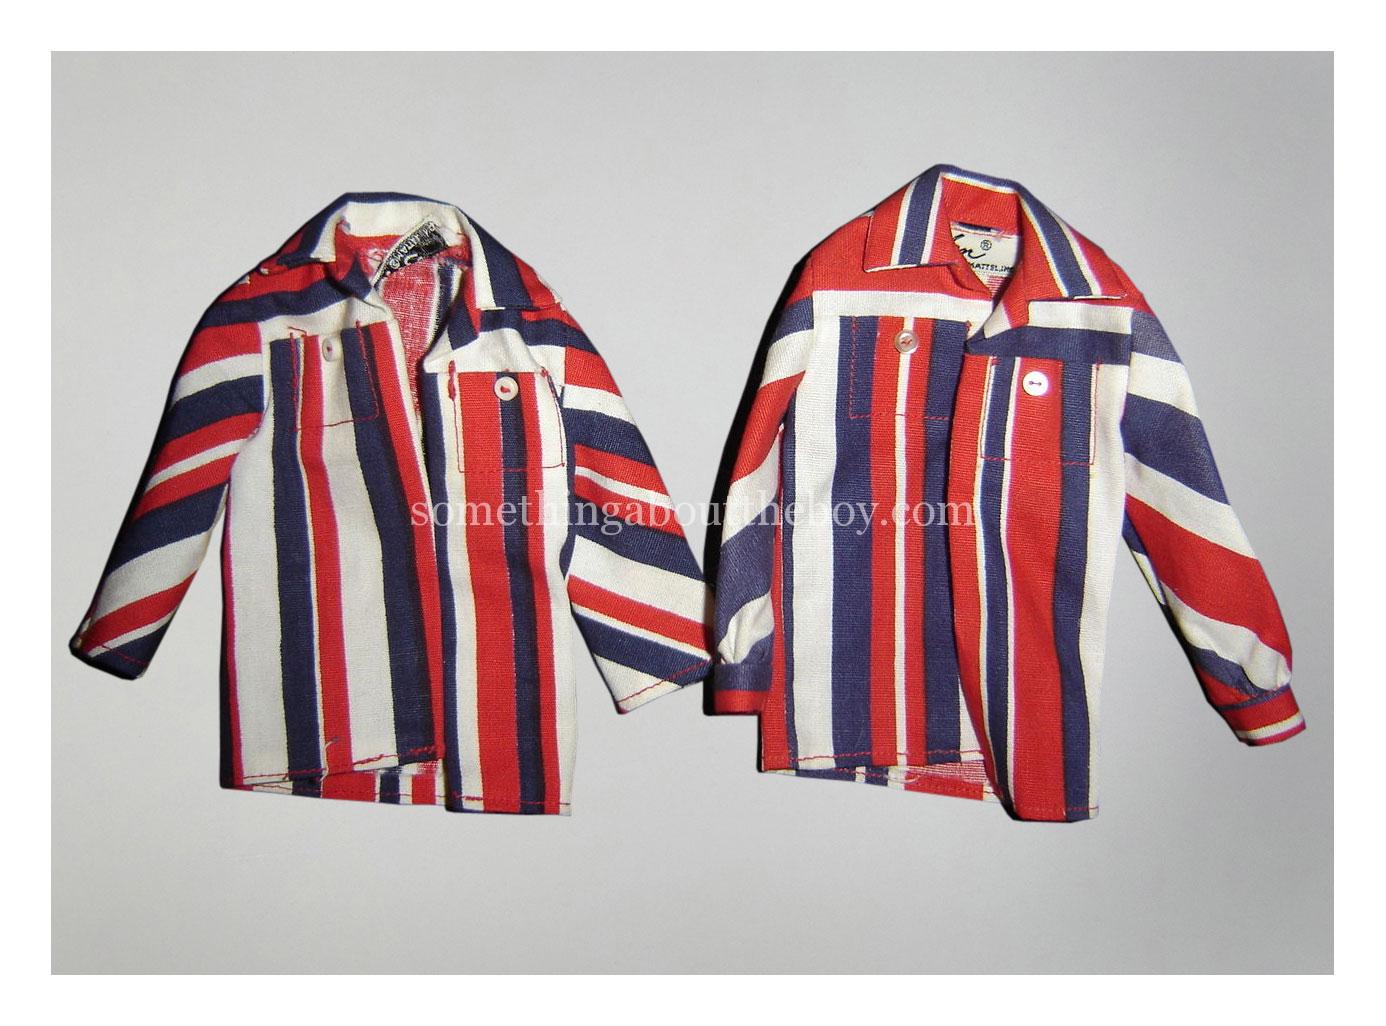 1971 #1449 The Sea Scene jackets (Variation on right)